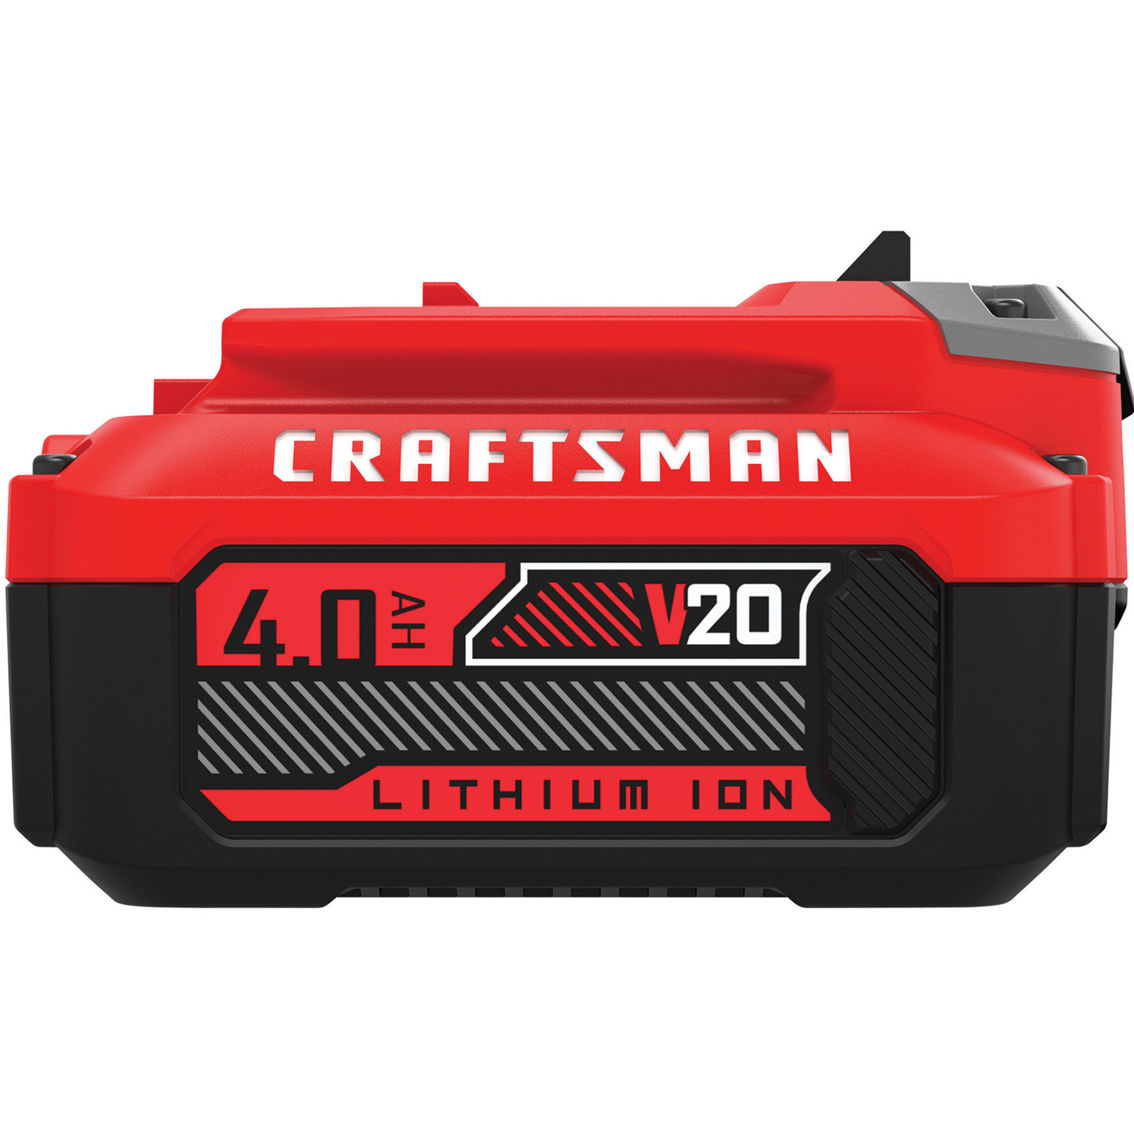 Craftsman V20 4Ah High Capacity Lithium Battery - Image 4 of 5